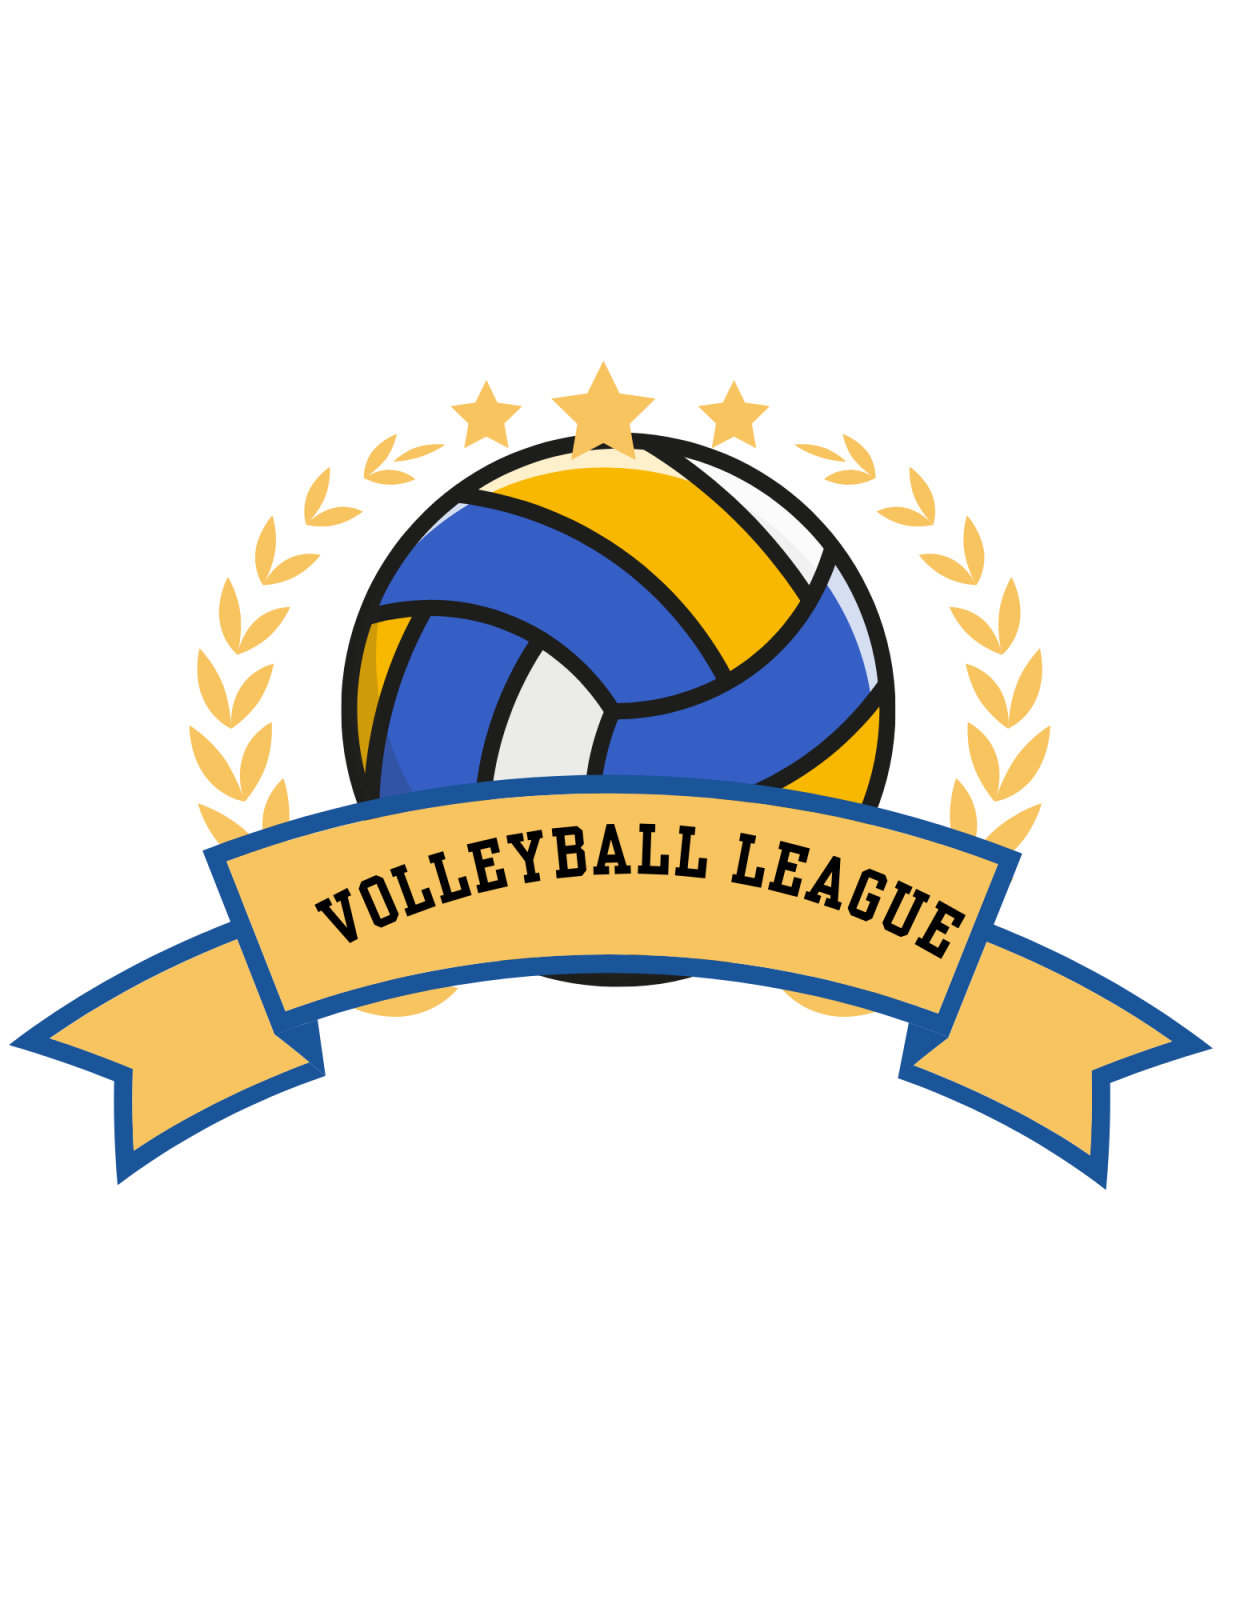 Volleyball Graphic (jpg)